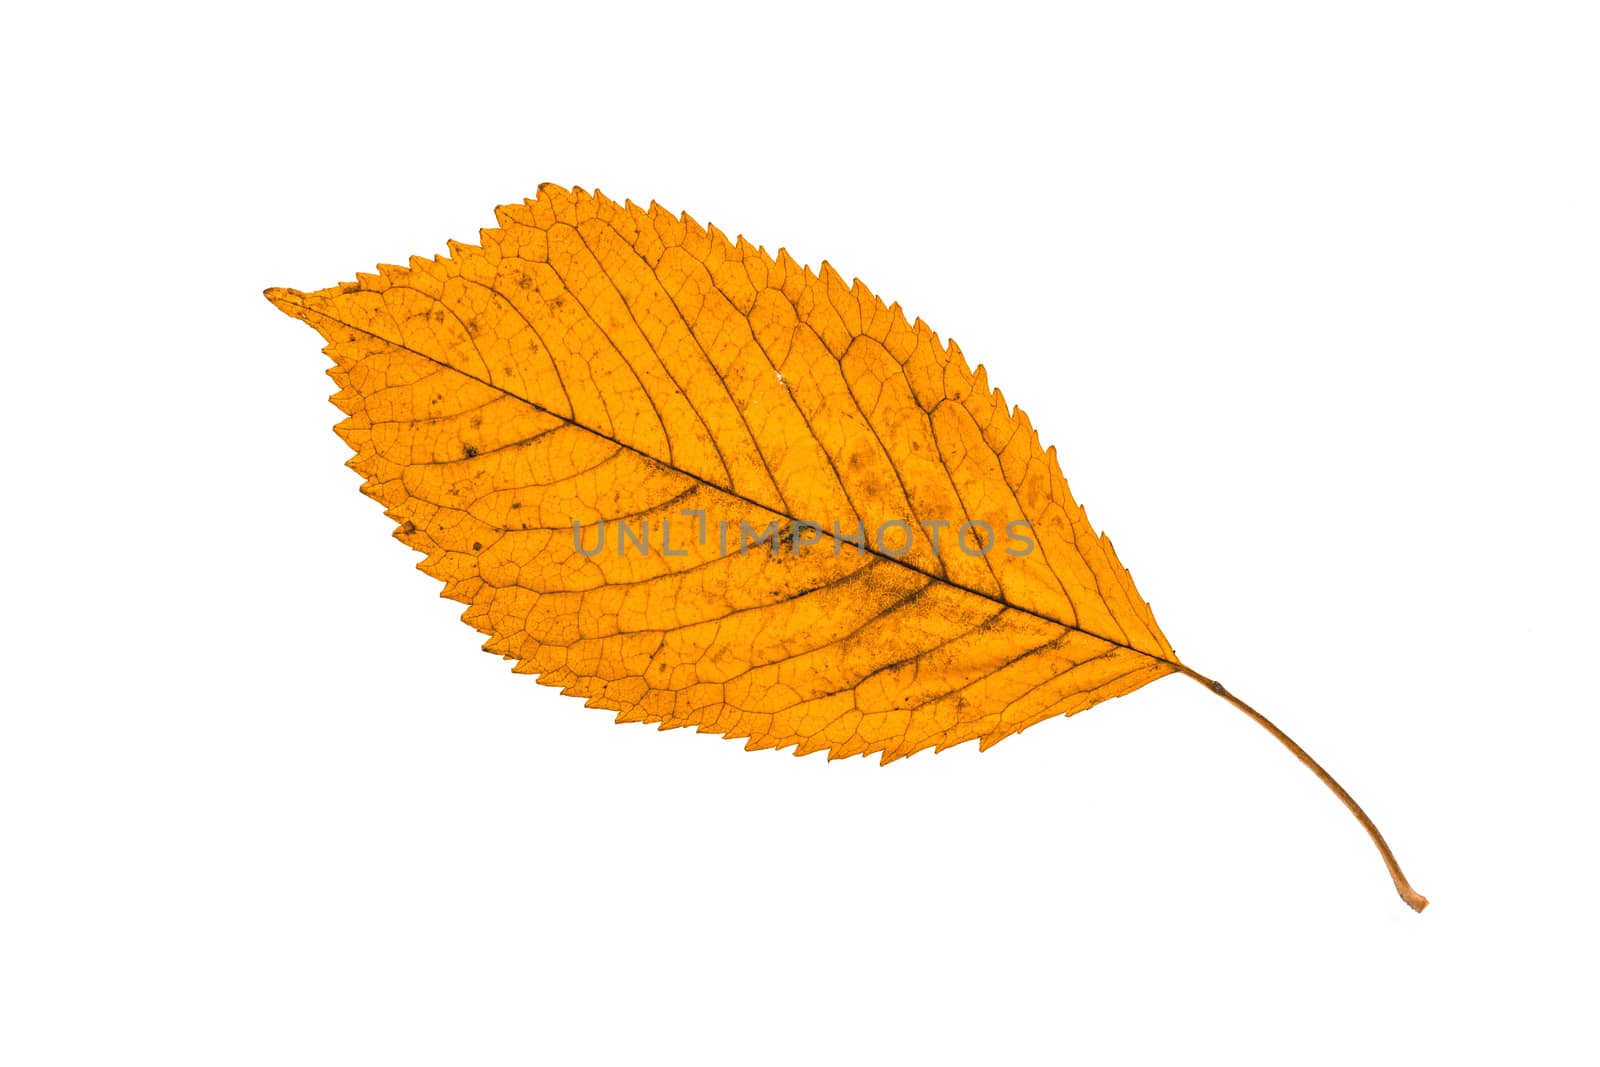 Fallen autumn leaf isolated on white